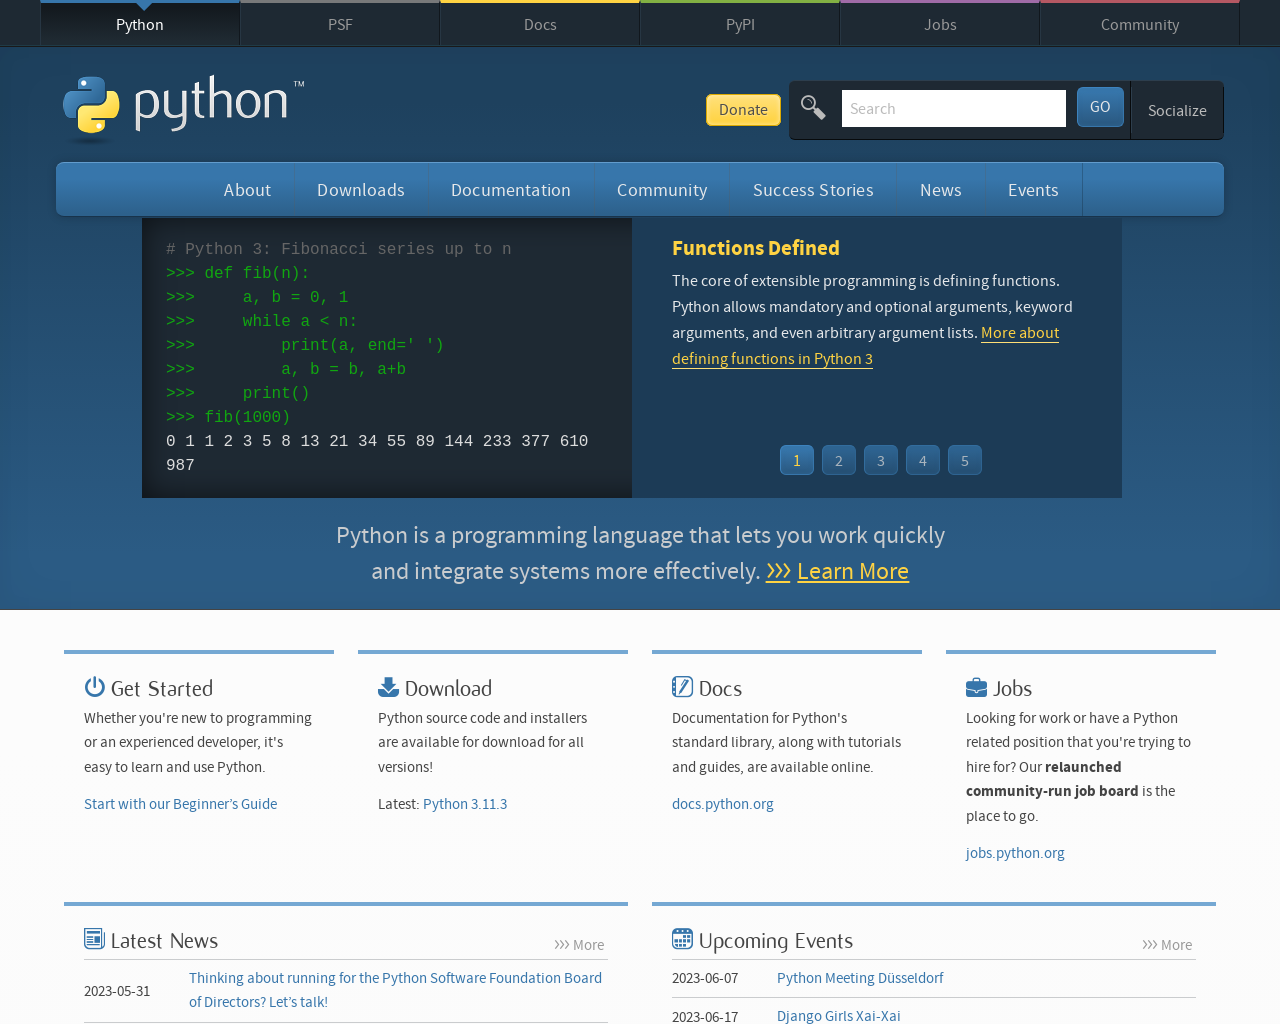 www.python.org